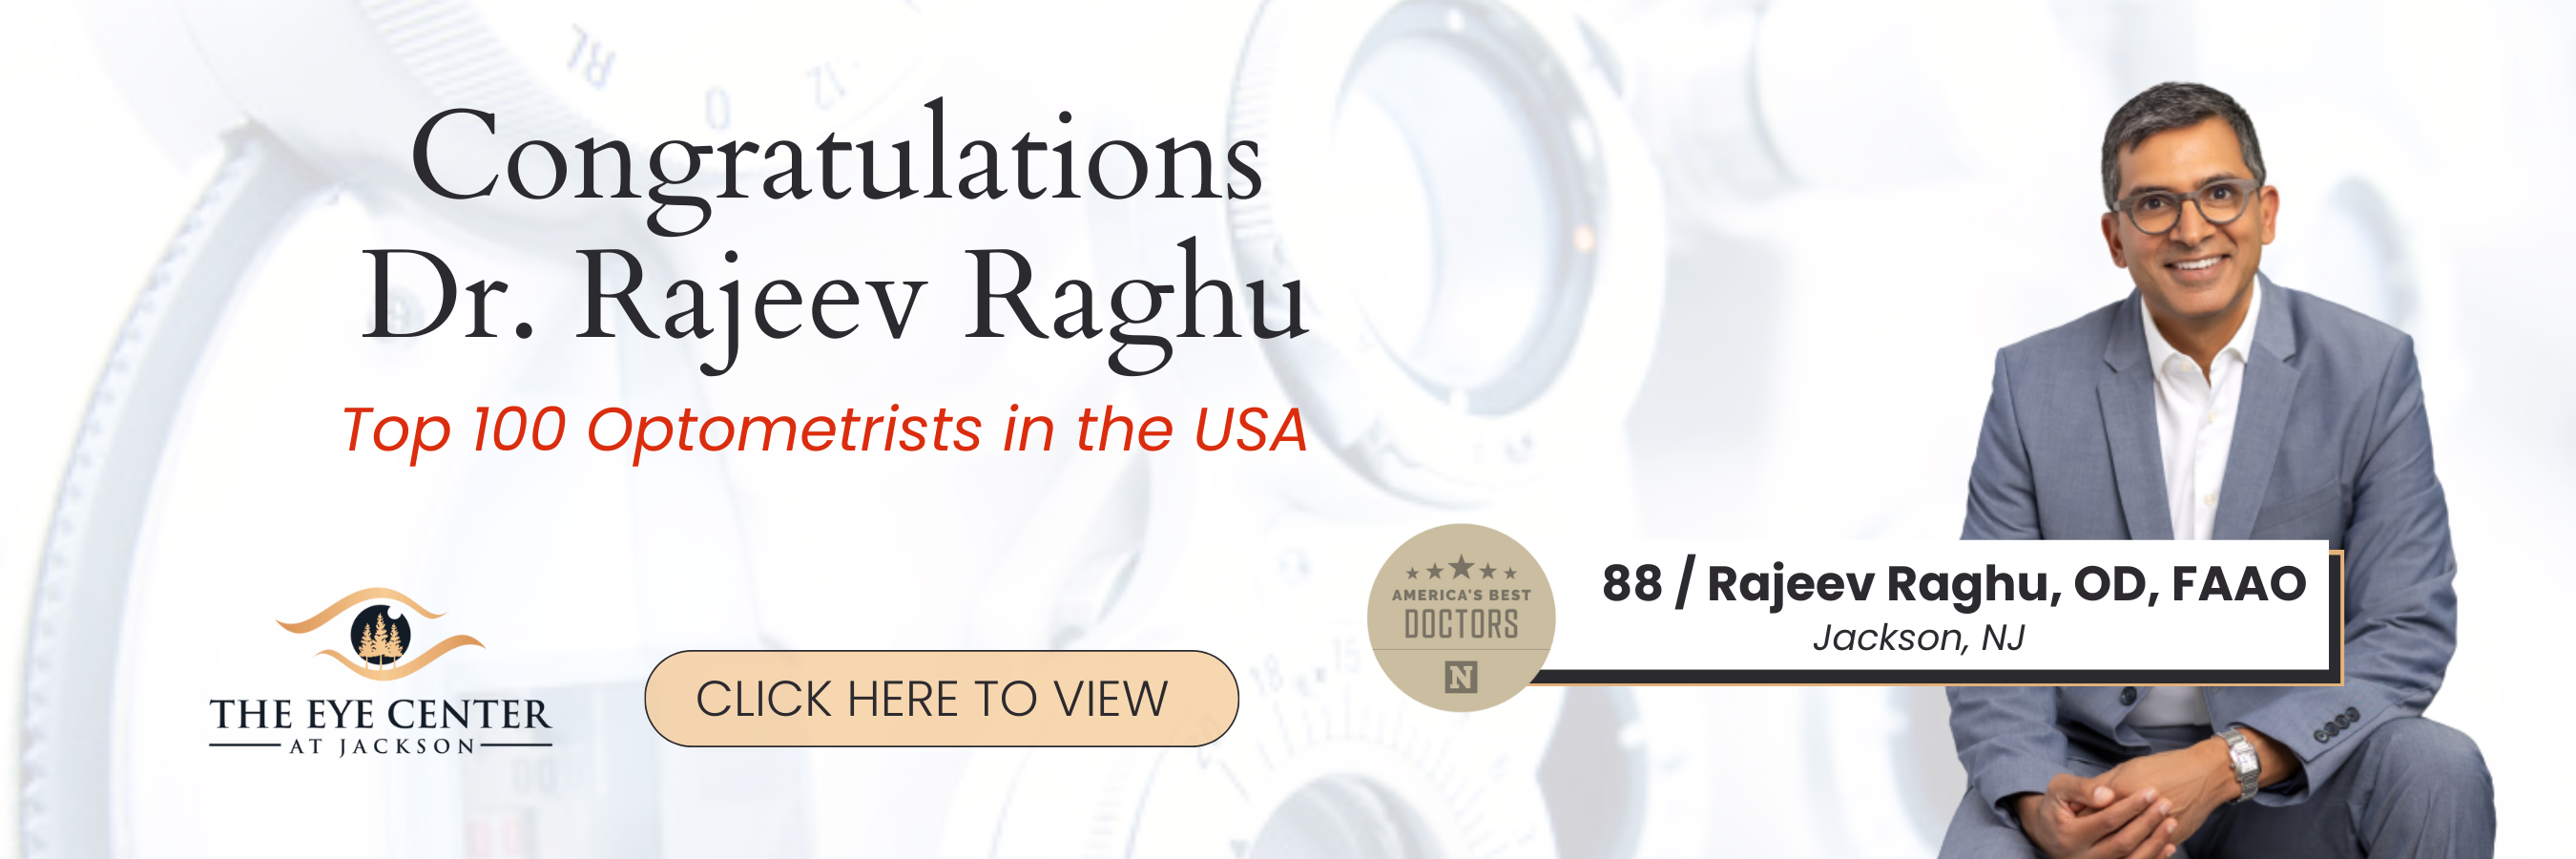 Congratulations Dr. Rajeev Raghu